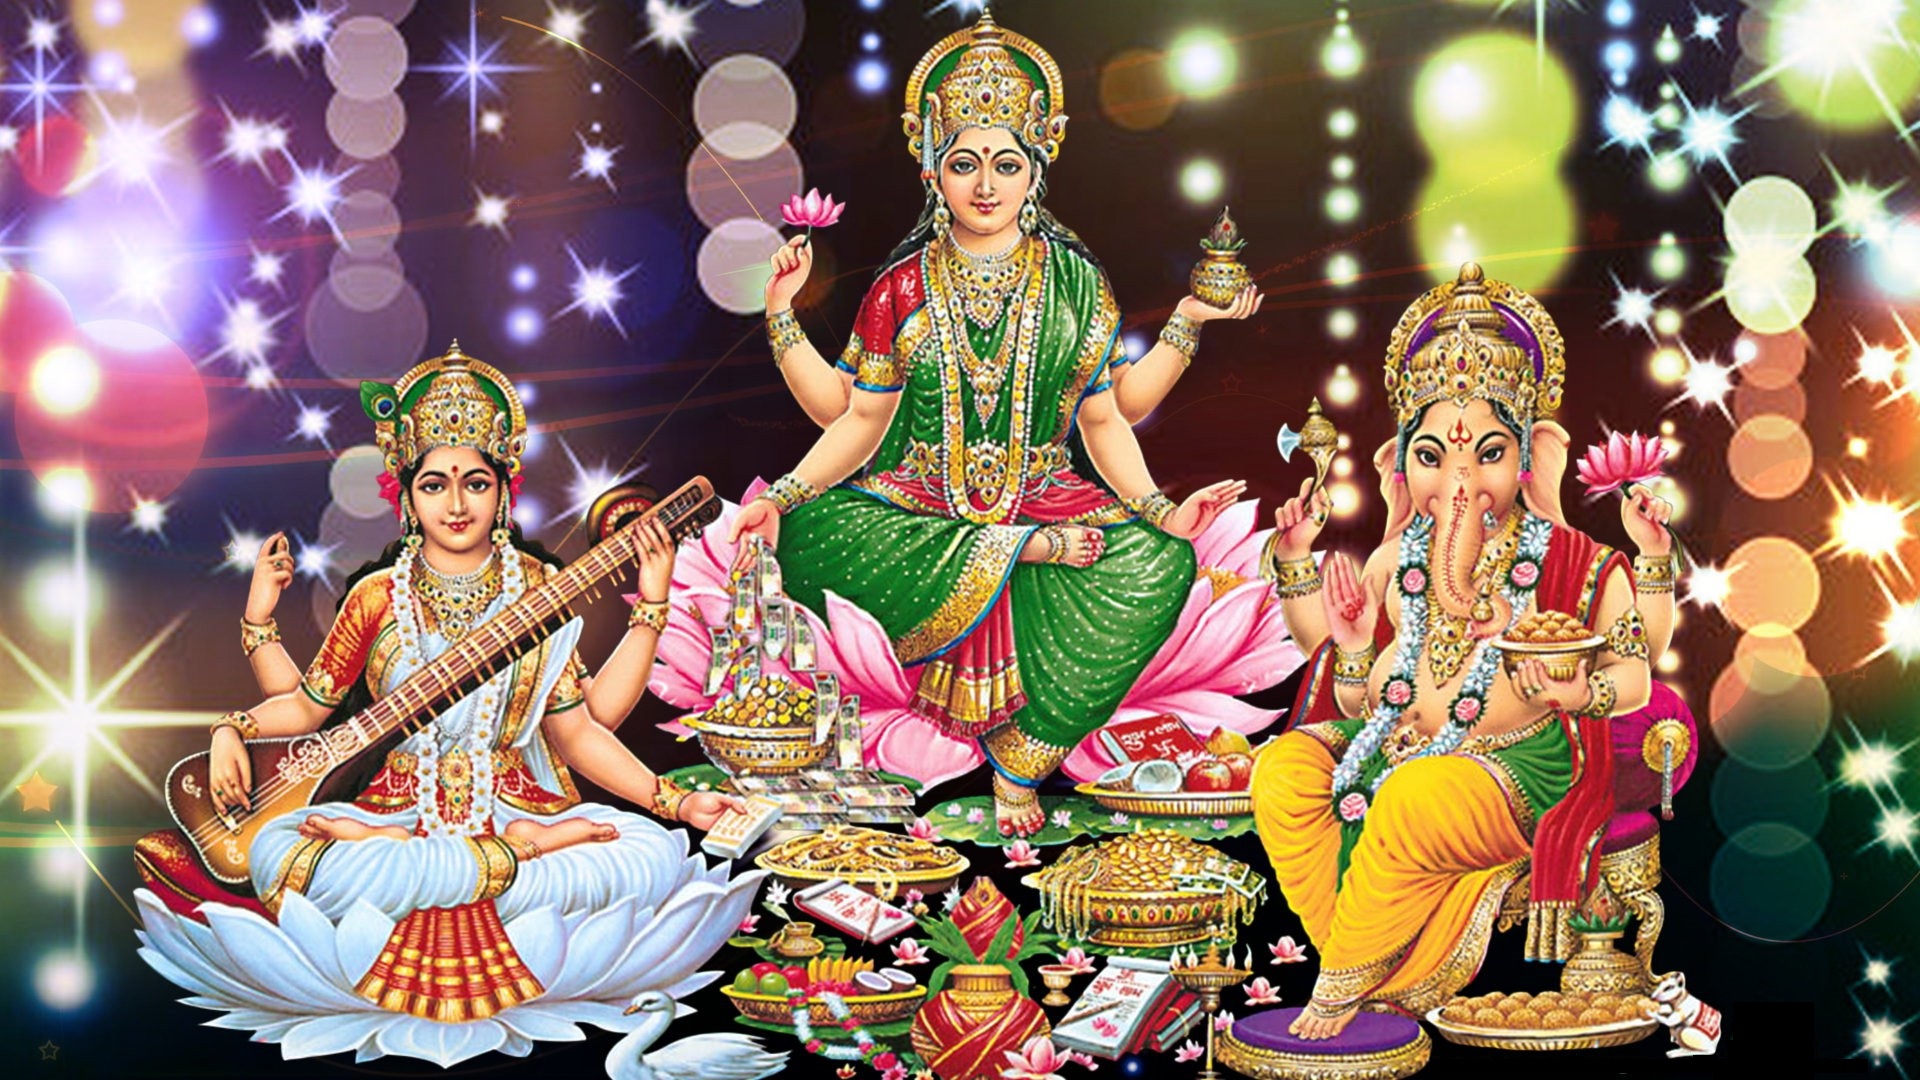 diosa lakshmi fondos de pantalla,evento,danza folclórica,tradicion,personaje de ficción,ritual